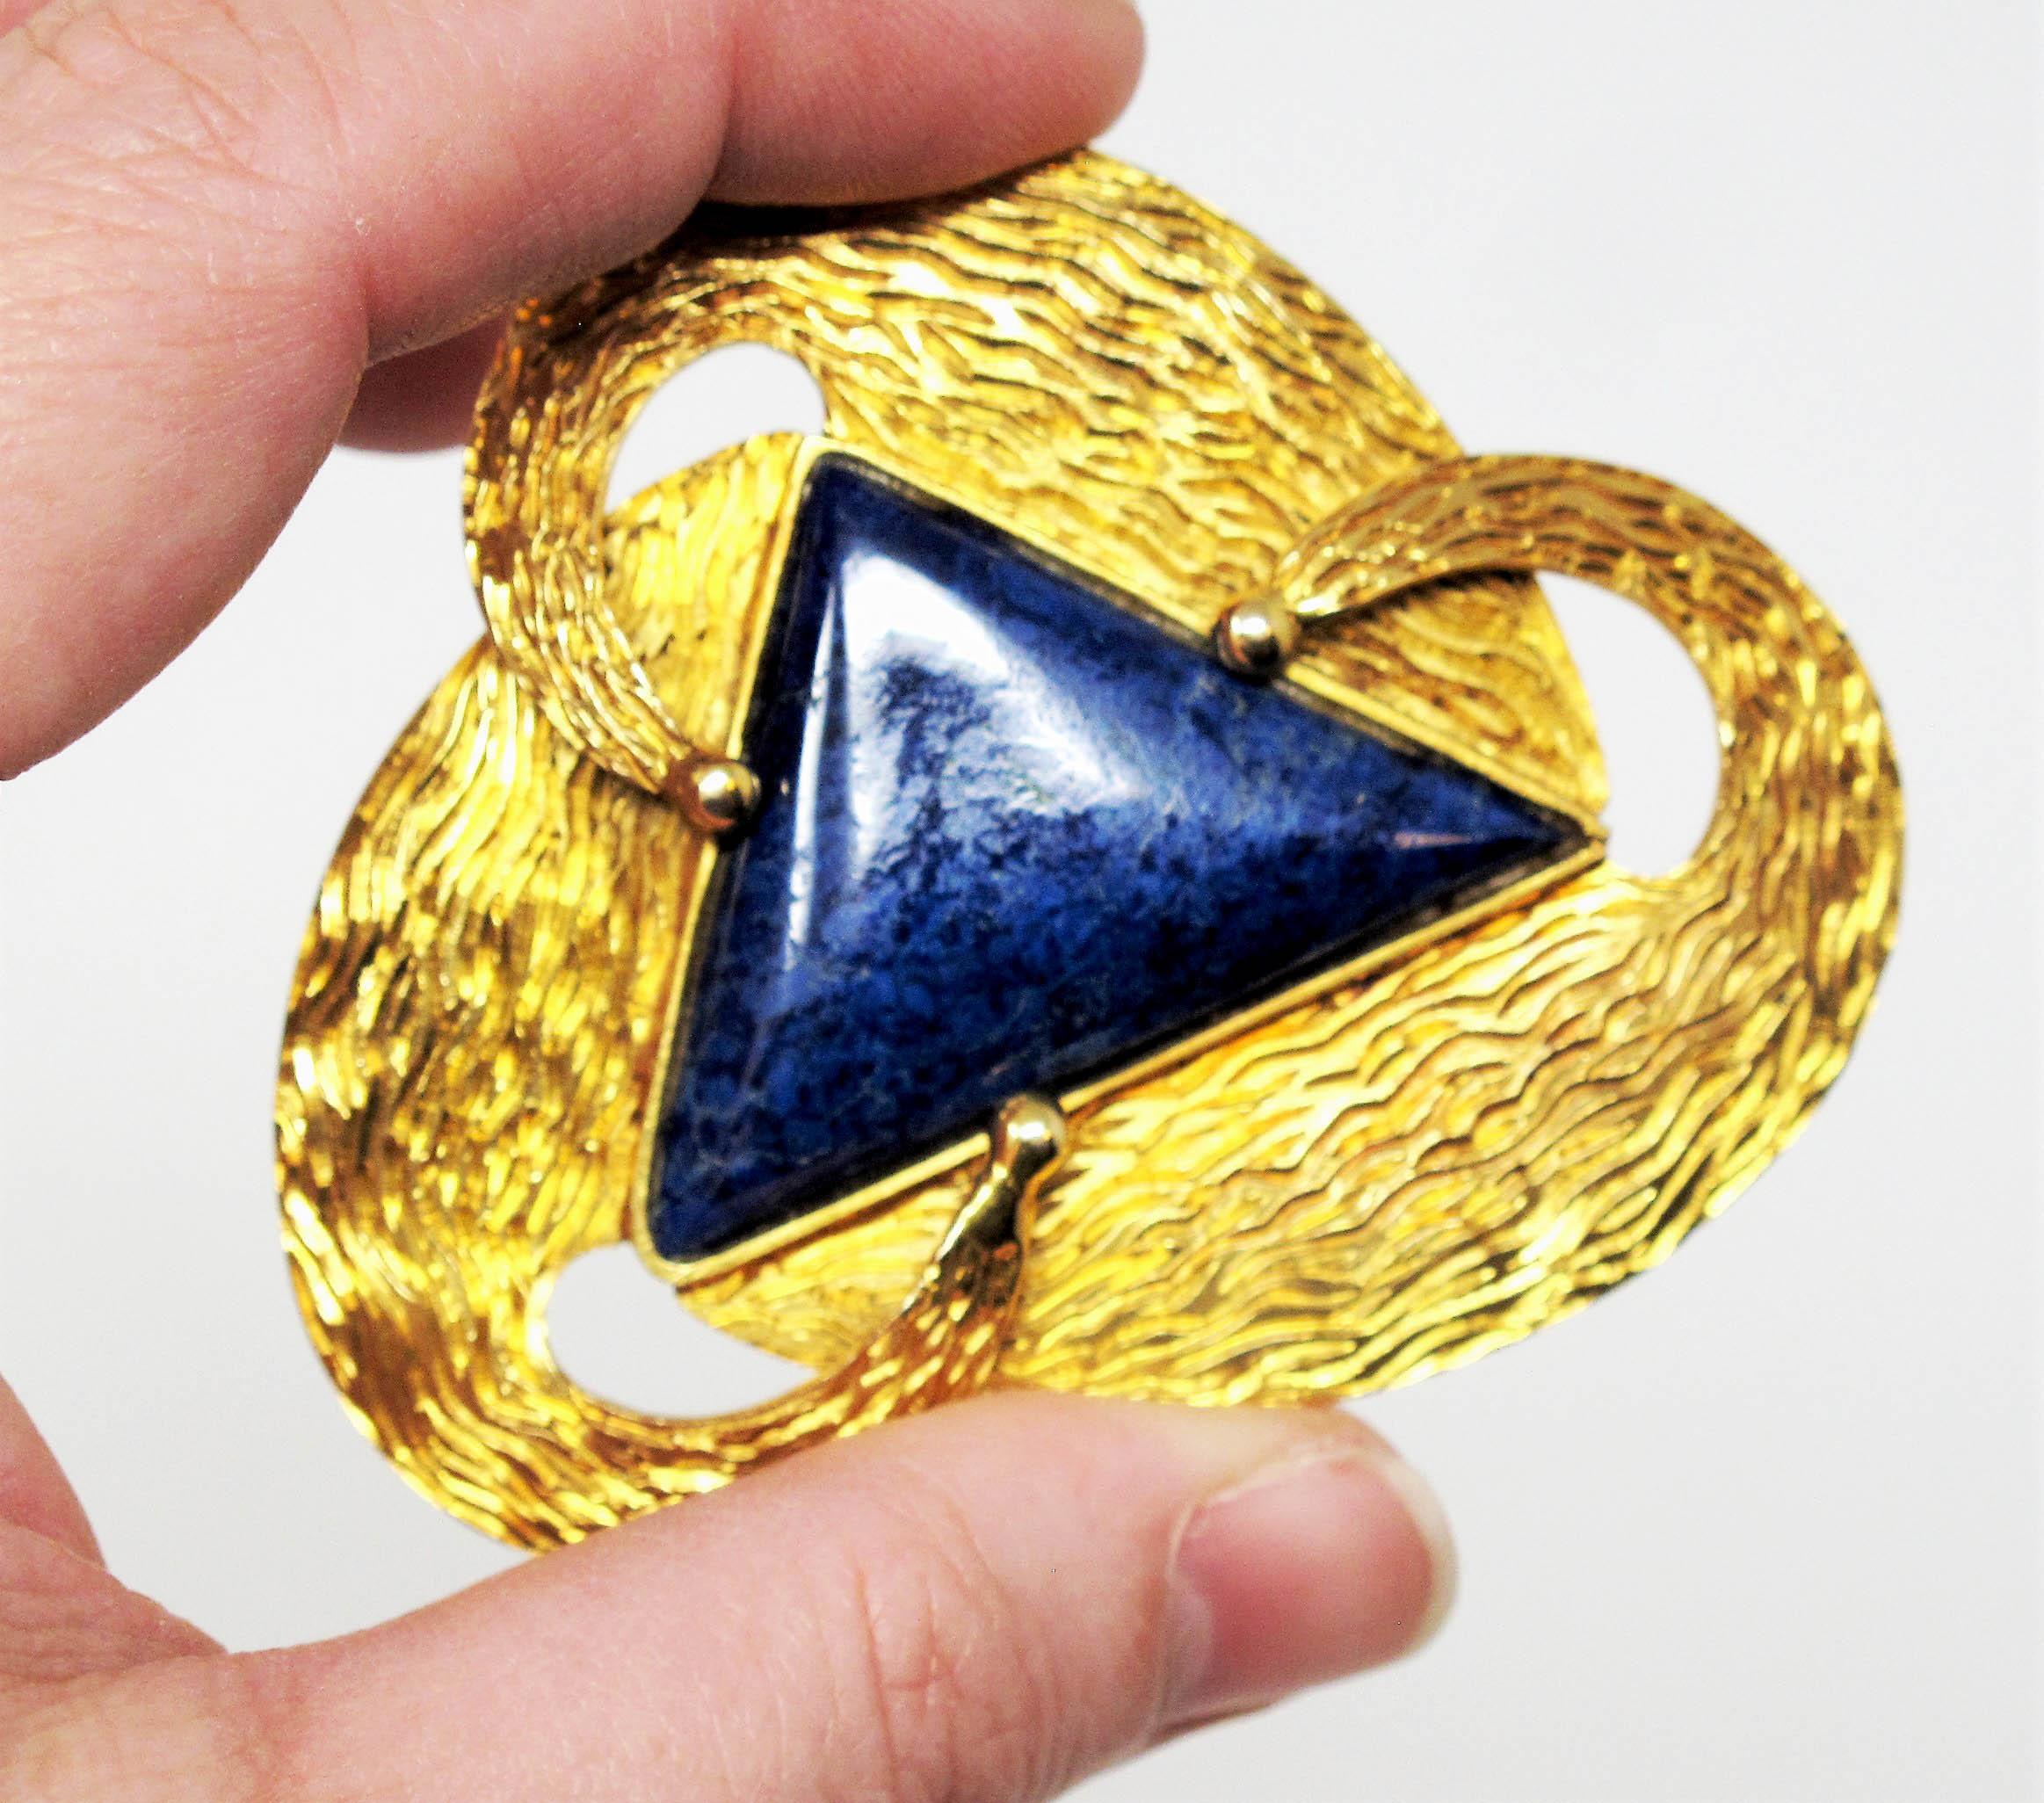 Handmade 27.5 Carat Triangular Natural Lapis Lazuli Brooch in 14 Karat Gold  For Sale 2